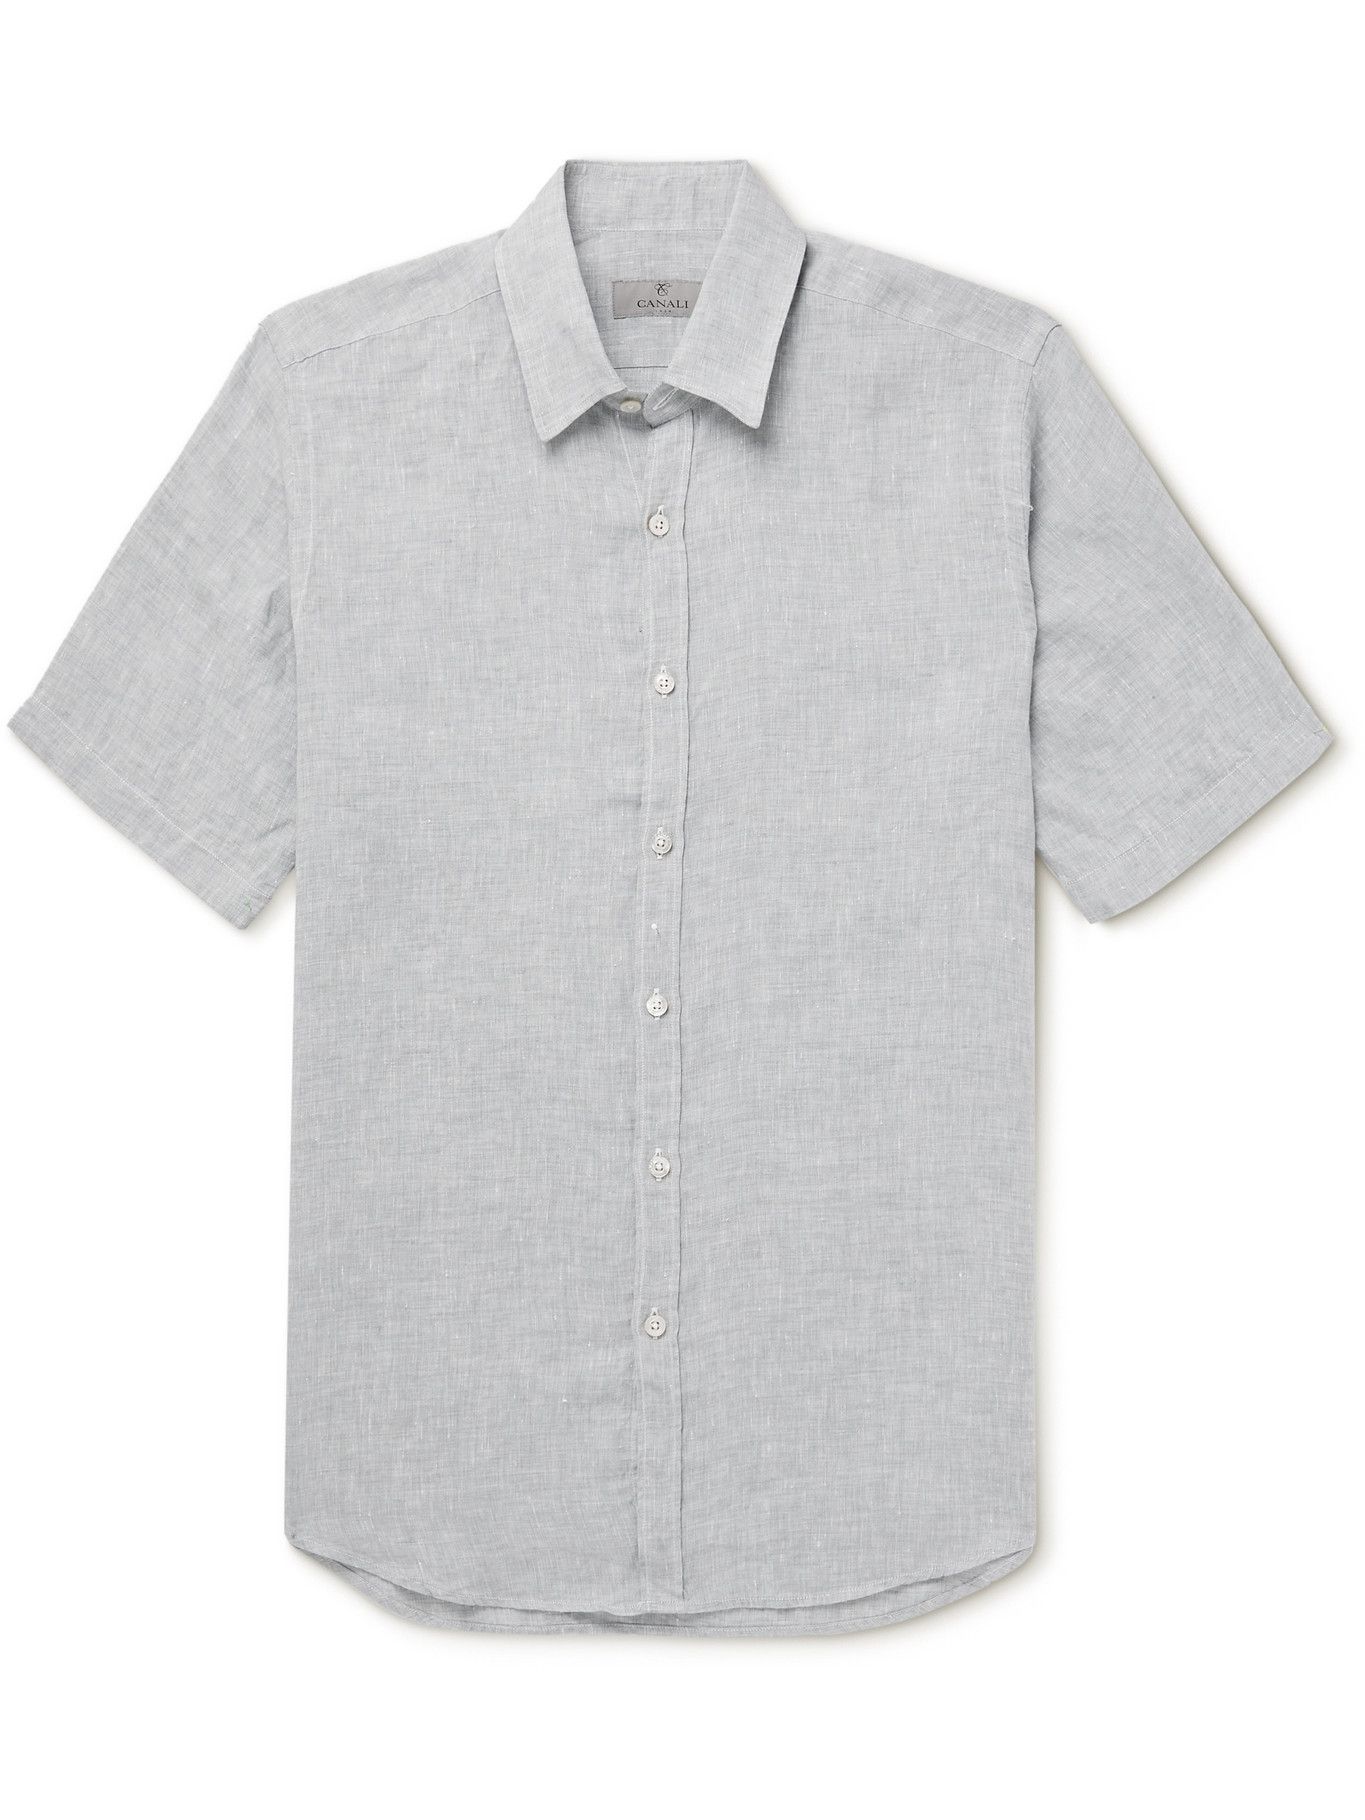 CANALI - Linen Shirt - Gray Canali